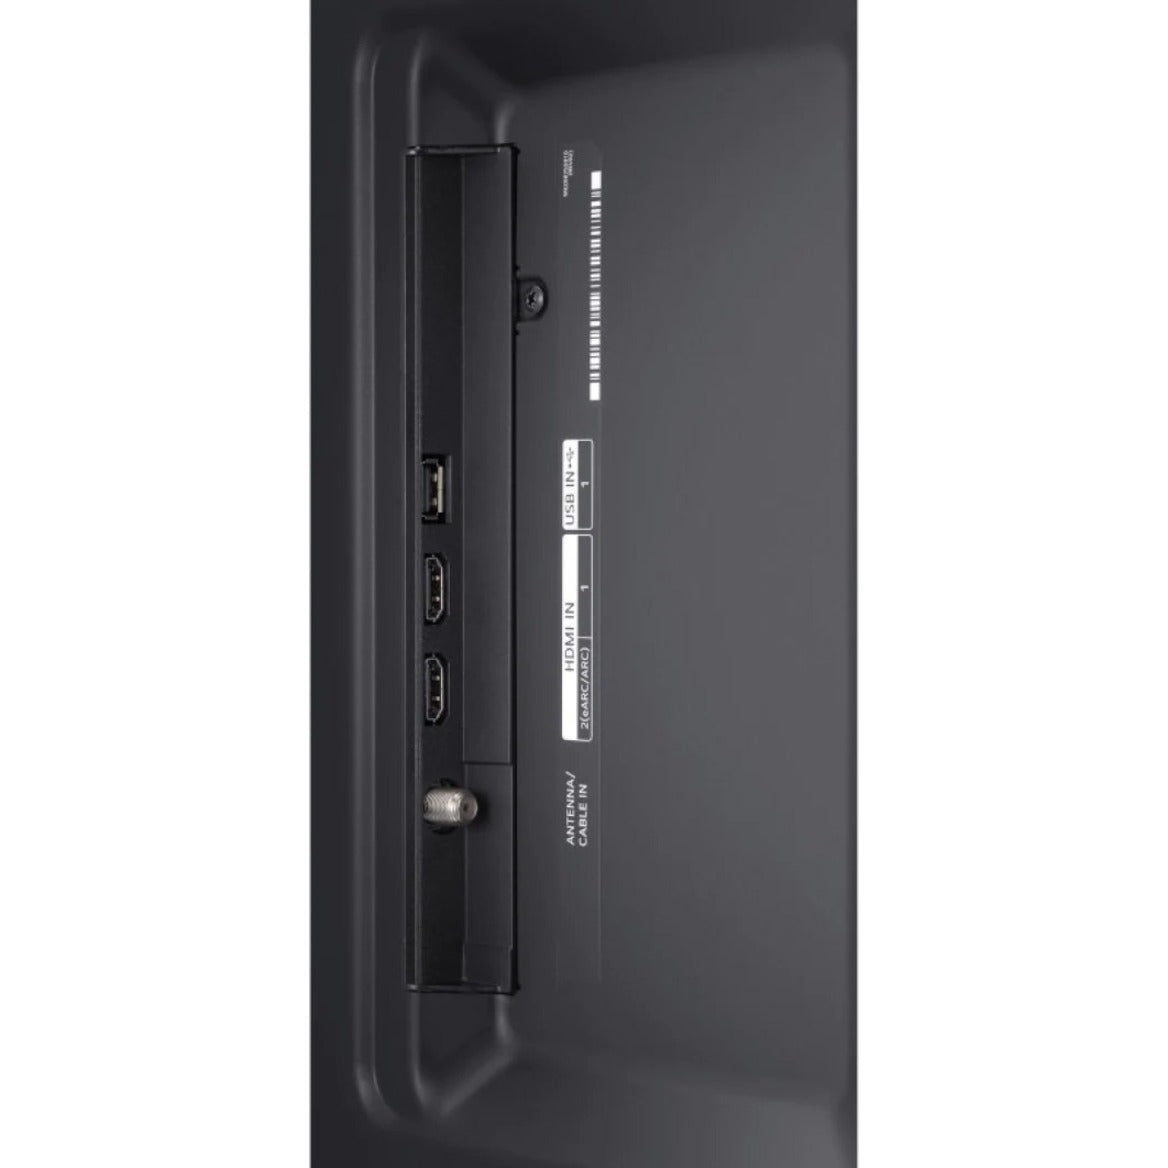 LG 75 75NANO75UPA NanoCell 75 Series 2021 75 inch 4K Smart UHD TV w/ AI ThinQ, TruMotion 120Hz, Dolby Digital, 20W RMS Output Power